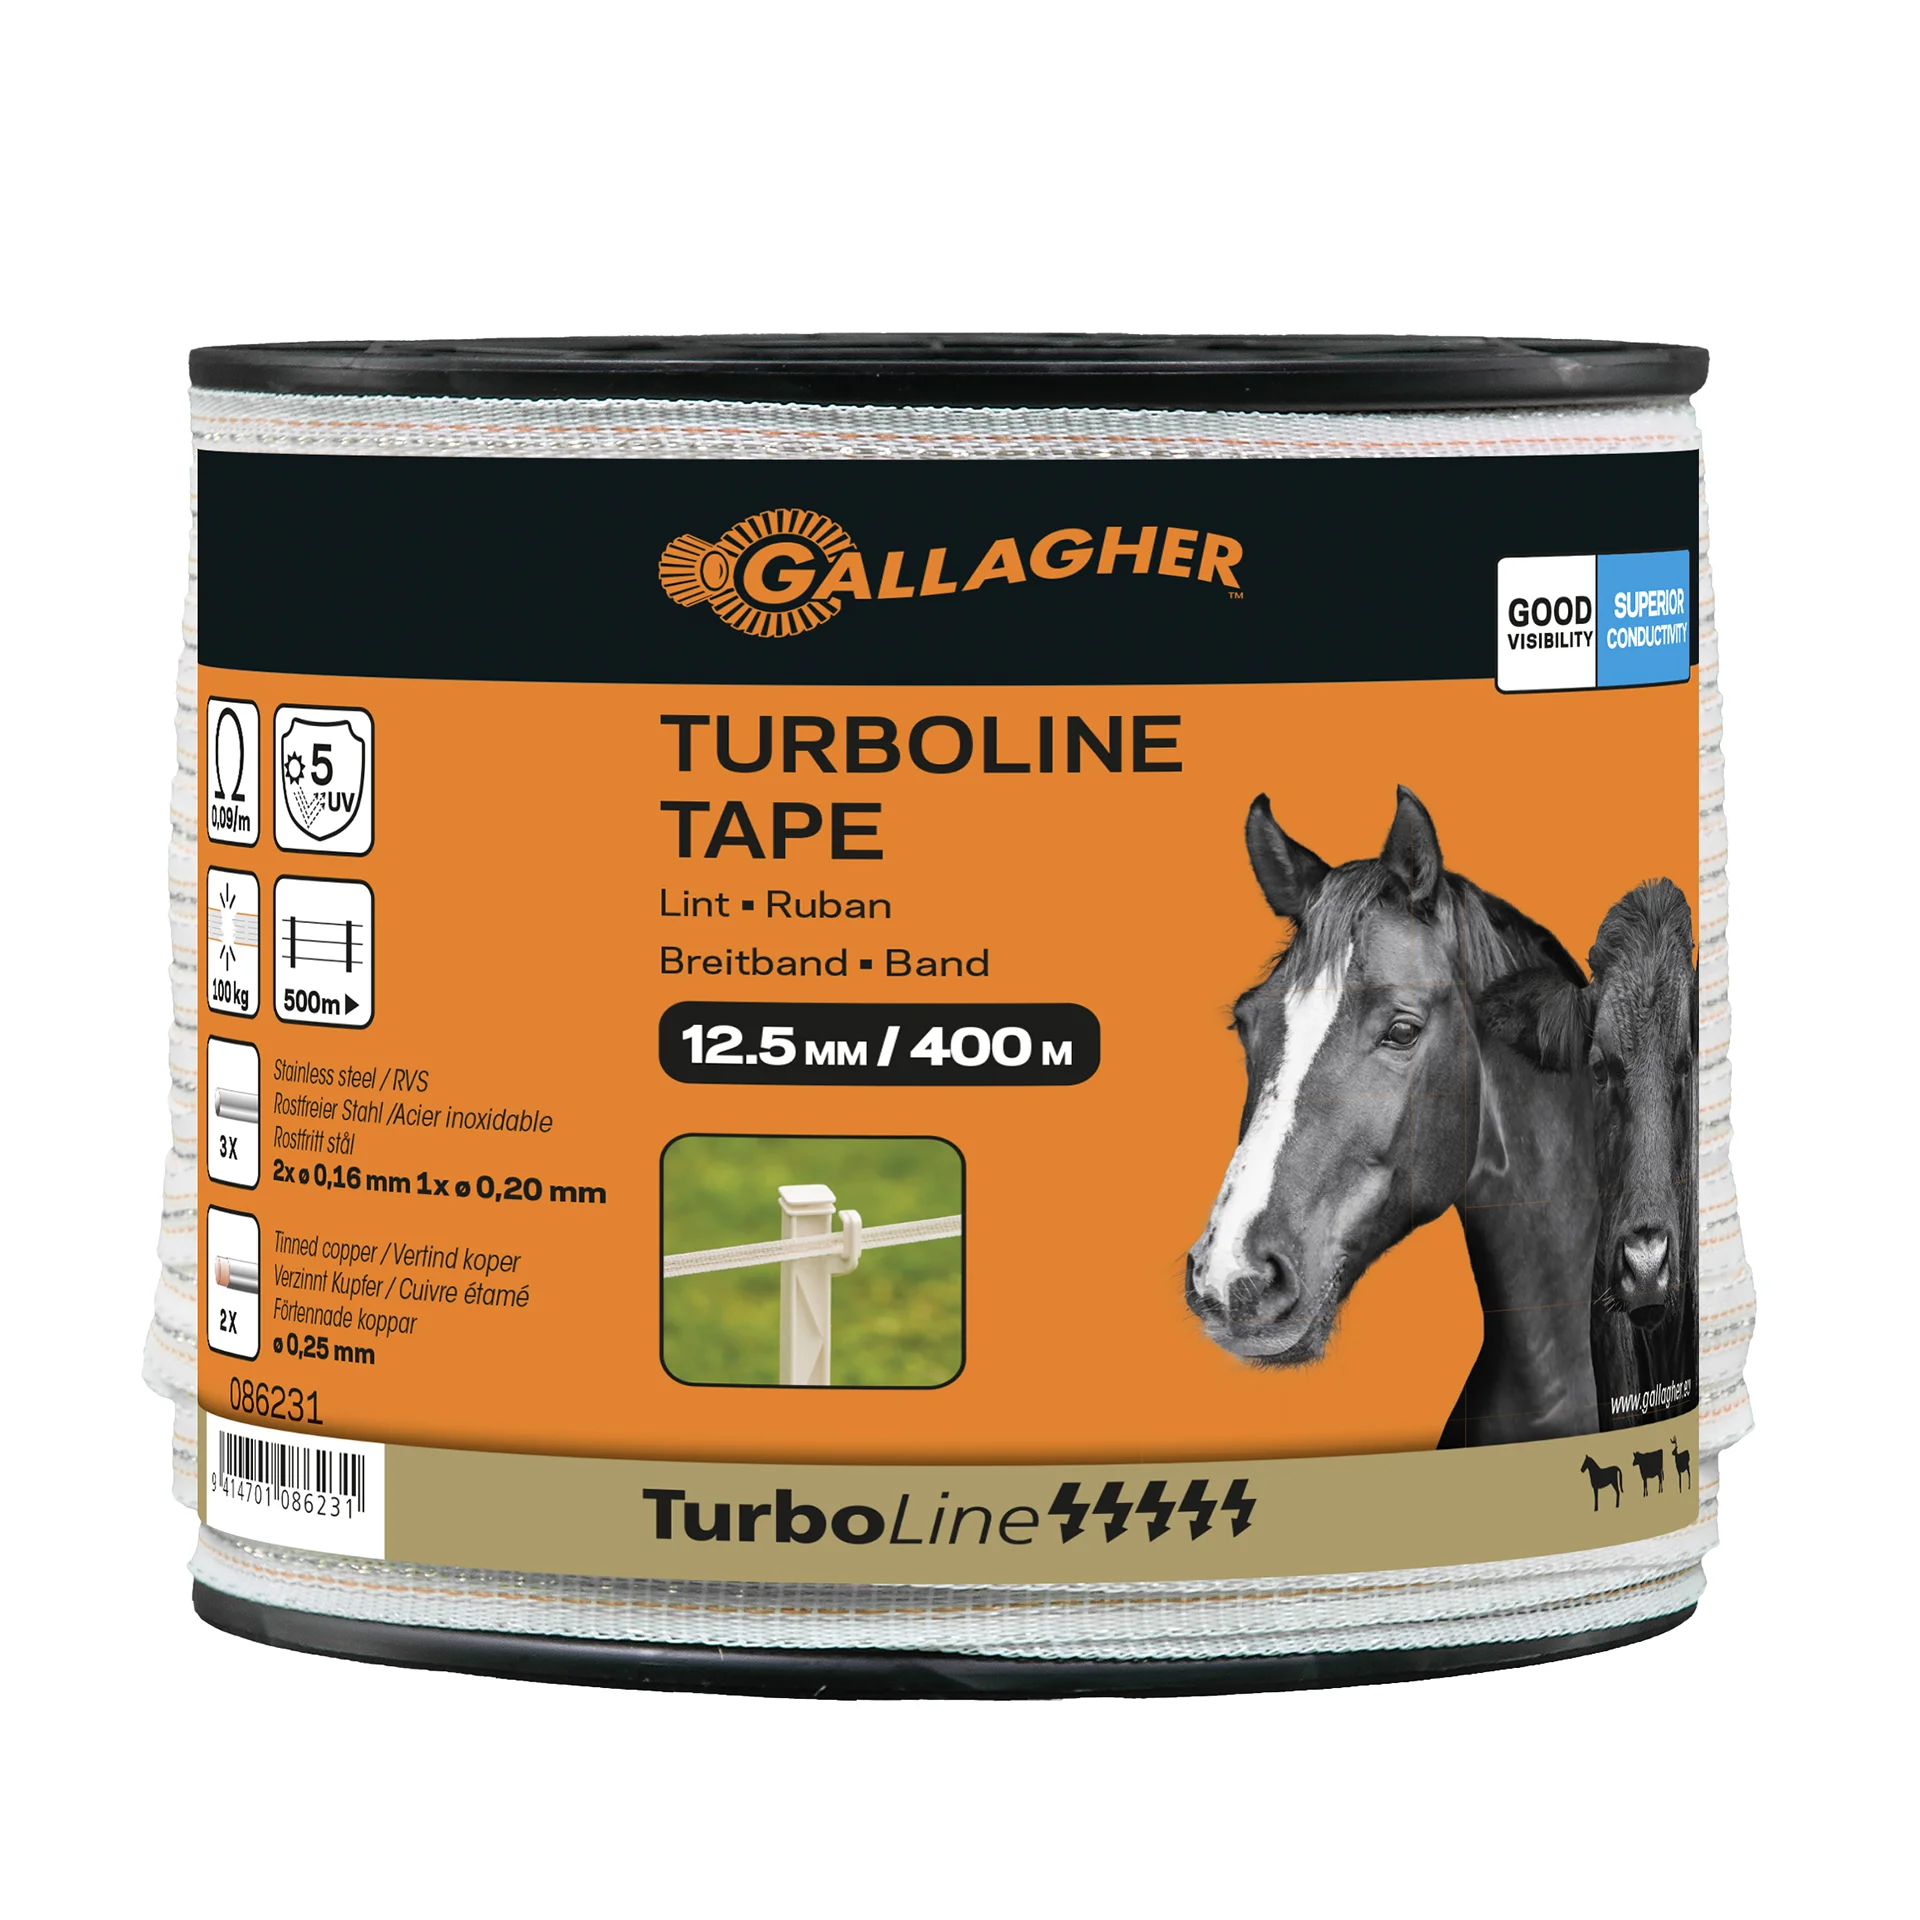 TurboLine tape 12.5 mm (white, 400 metres)